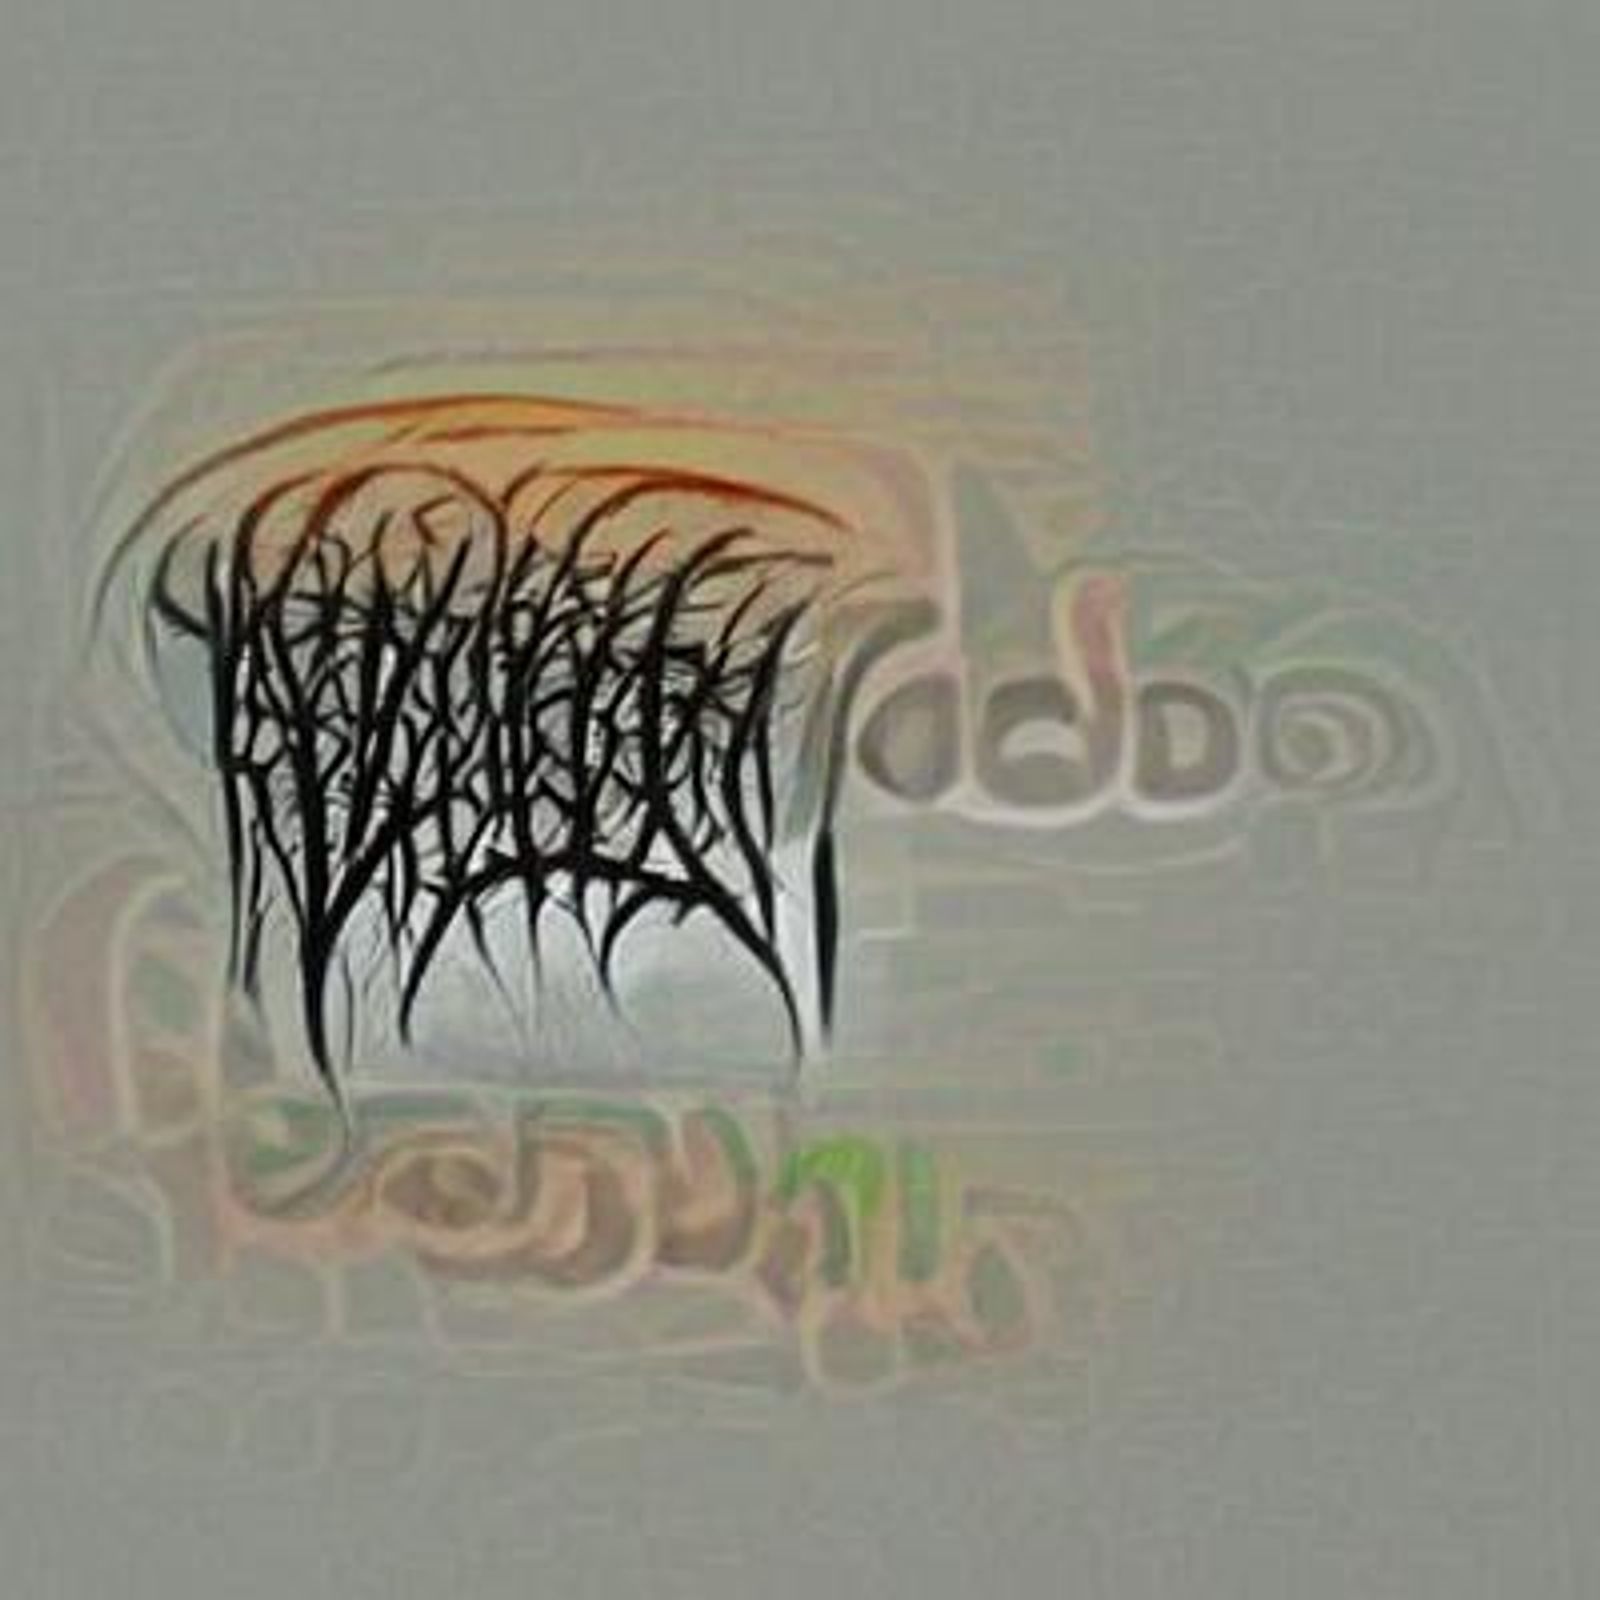 brutal death metal band logos